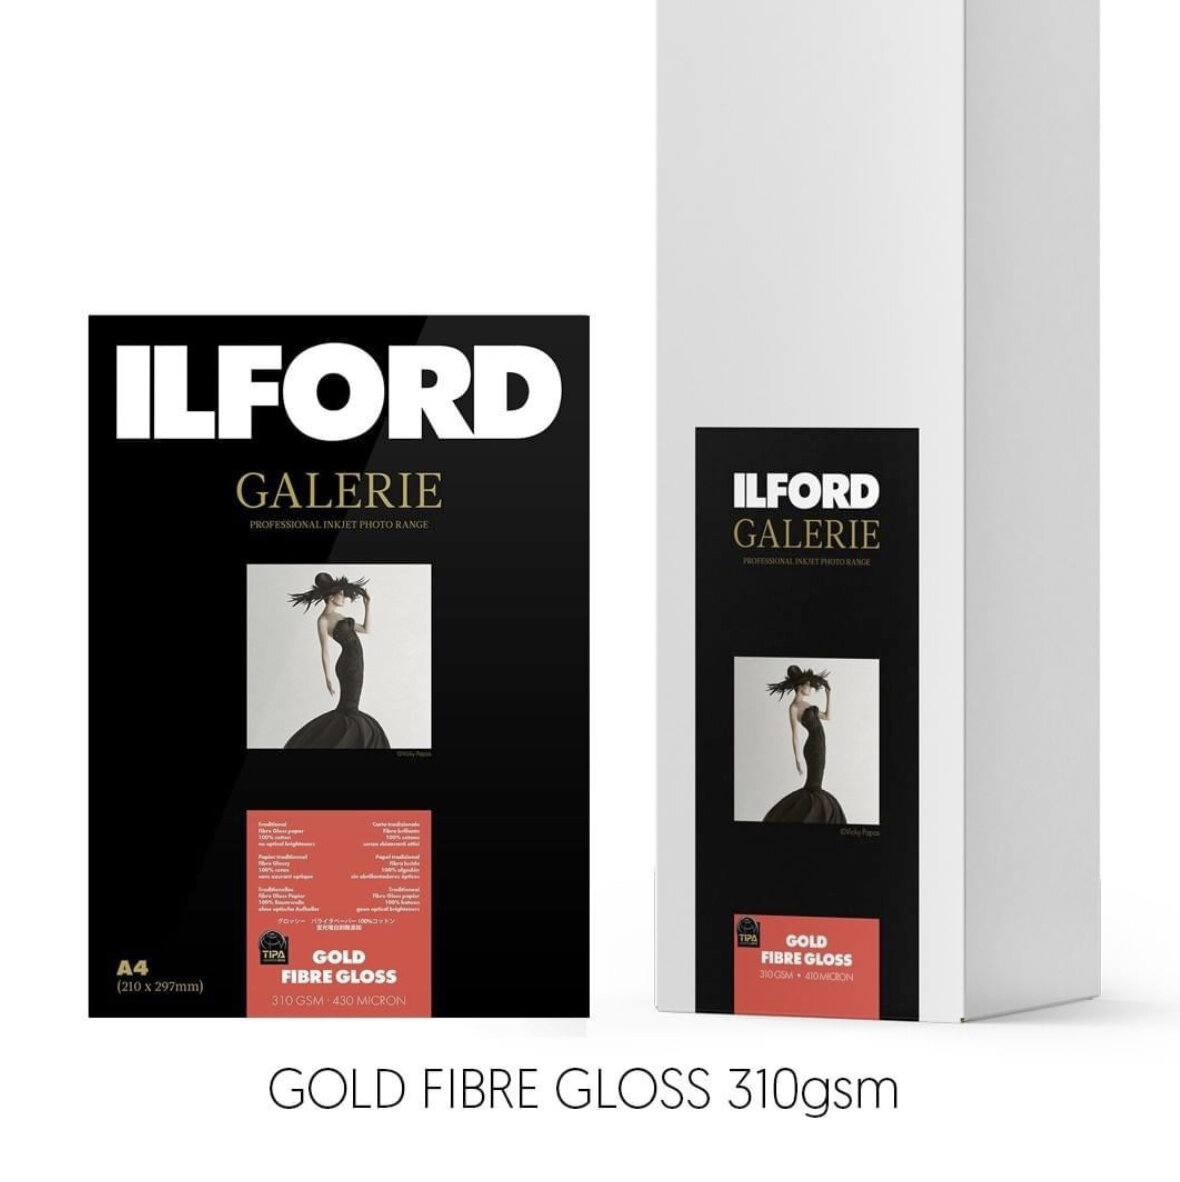 A3+ Ilford Galerie Gold Fibre Gloss — Rāhera Creative